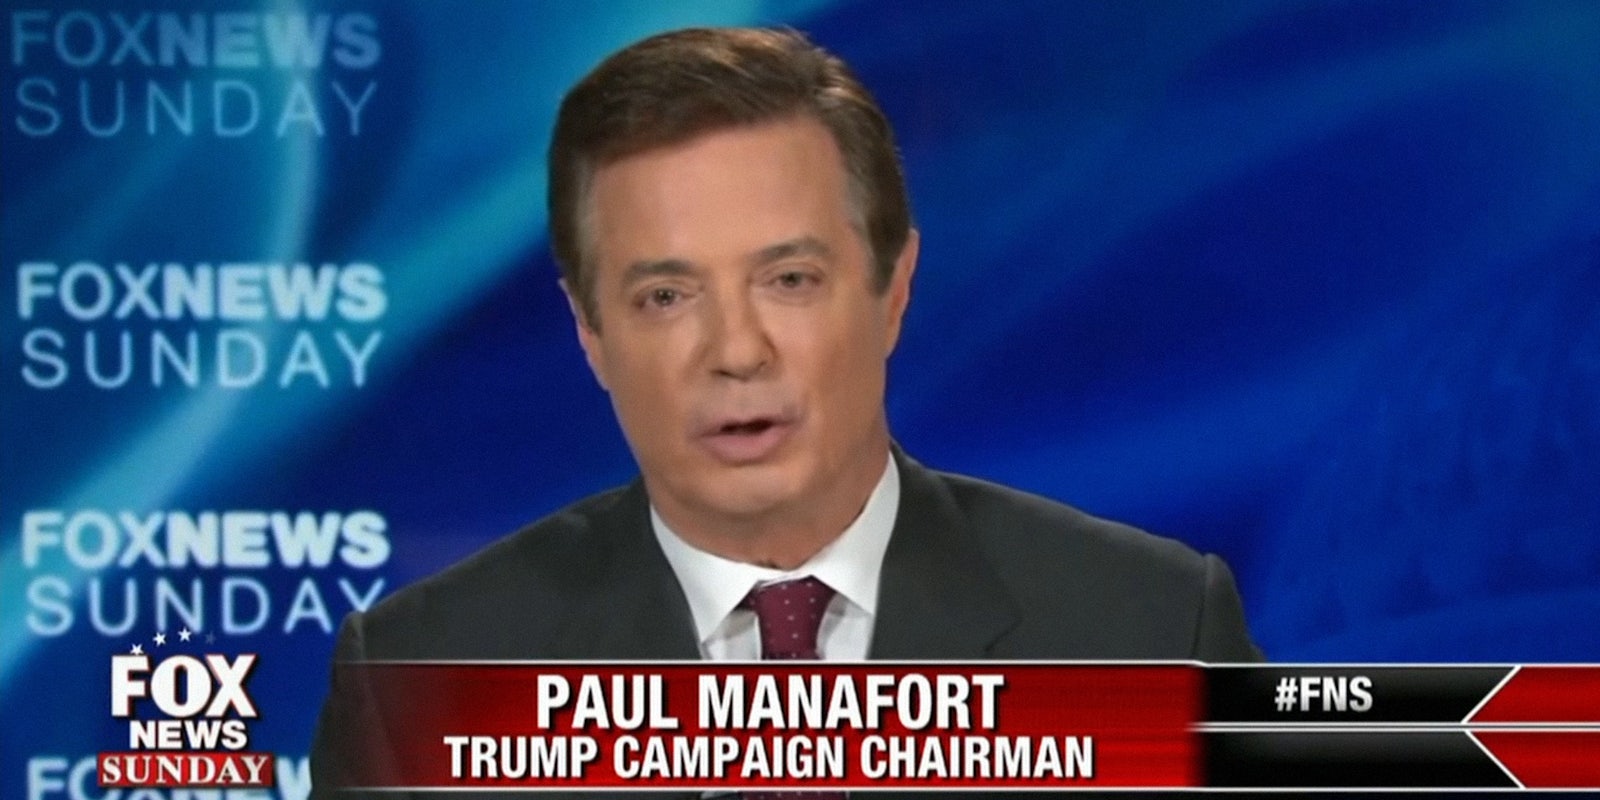 Paul Manafort on Fox News